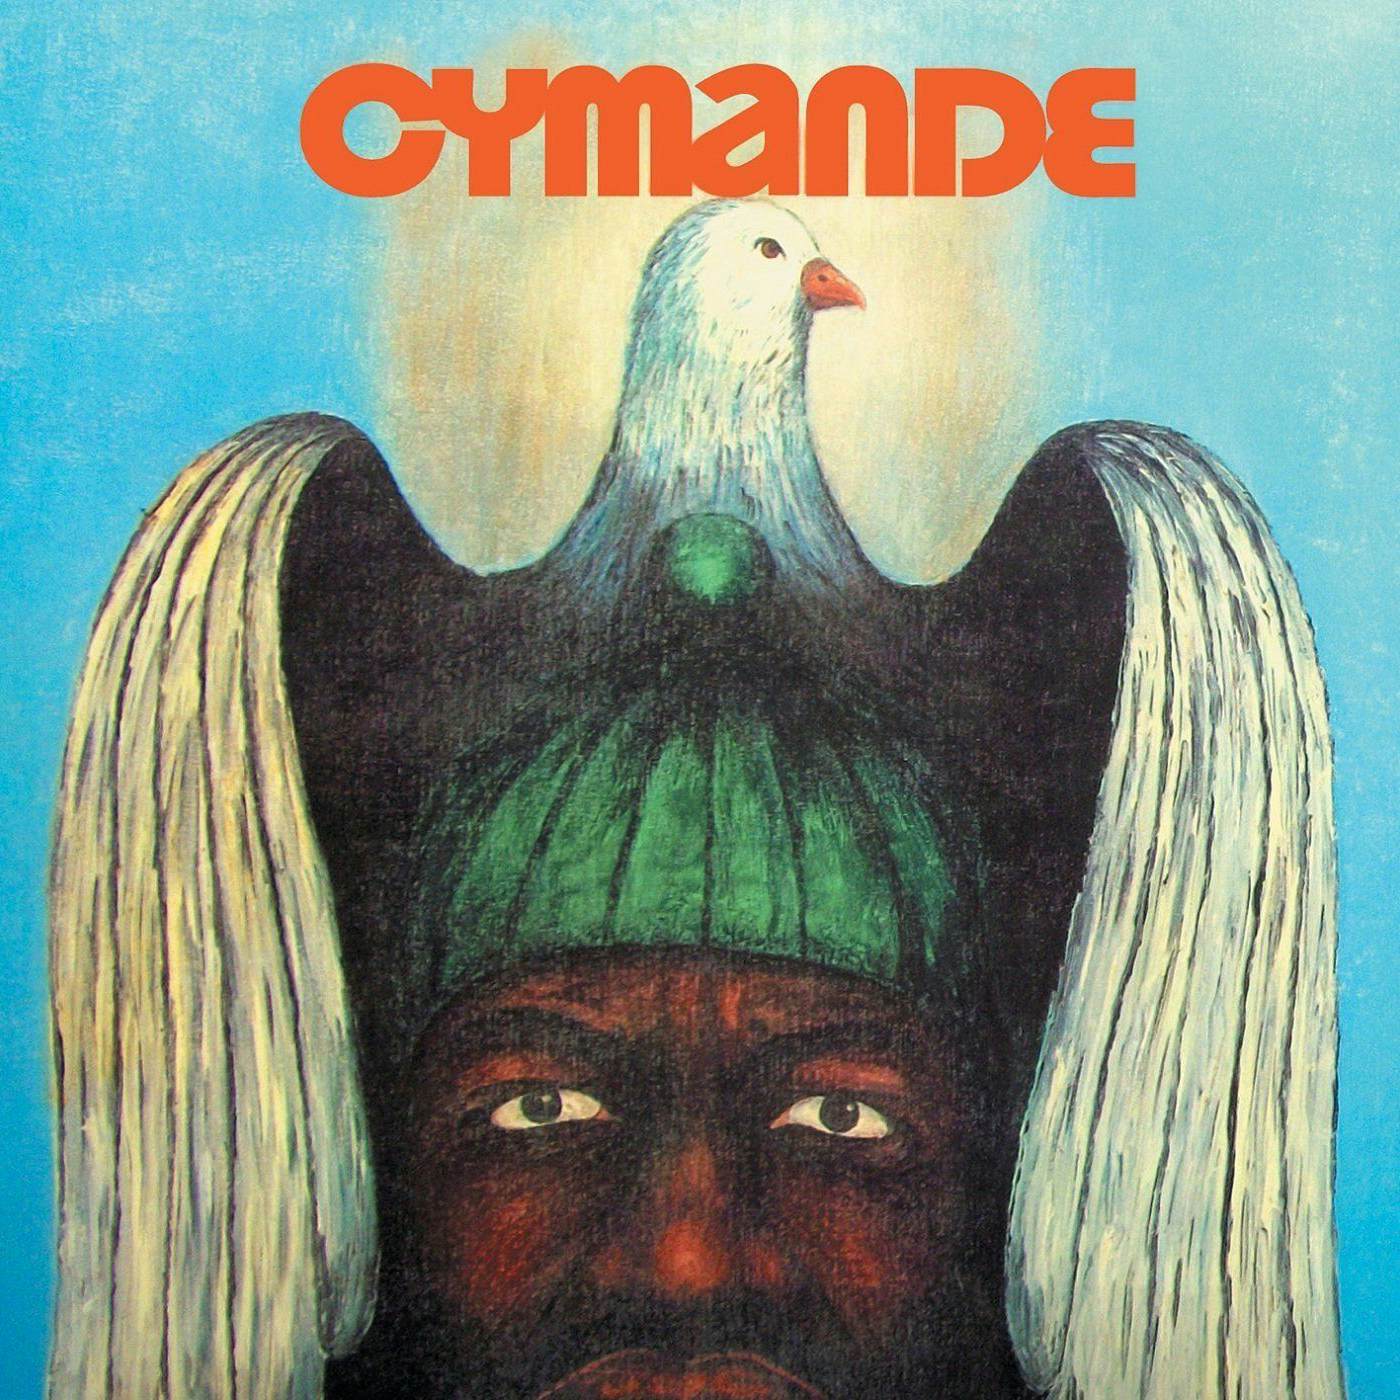 Cymande Vinyl Record